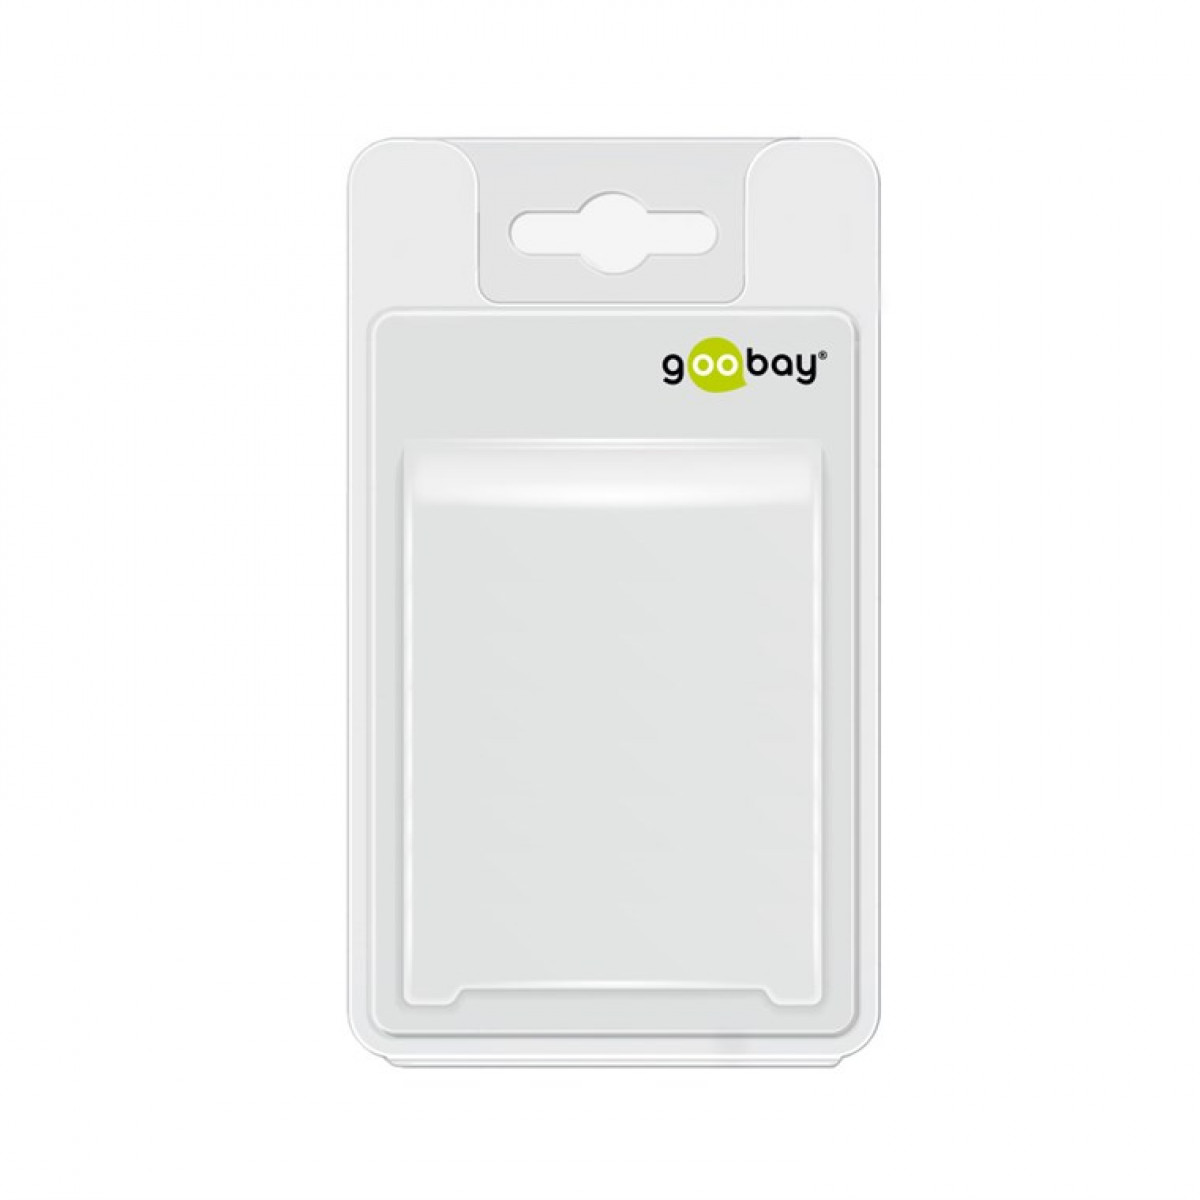 GOOBAY USB 3.0 Kartenleser Kartenlesegerät